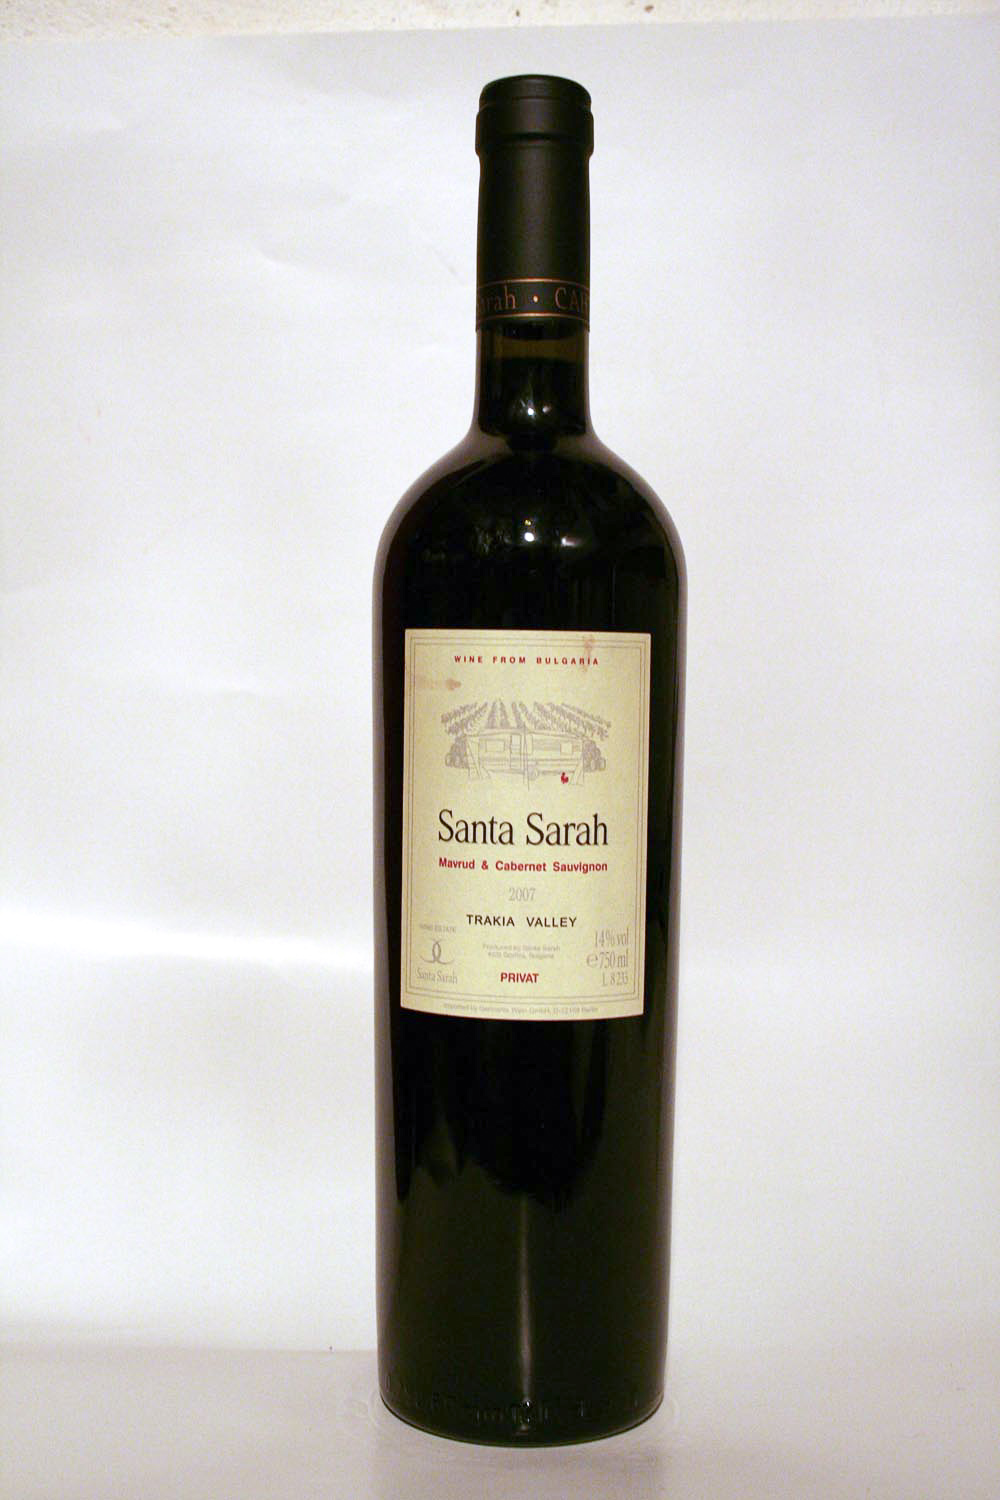 Santa Sarah Privat Mavrud & Cabernet Sauvignon 2007